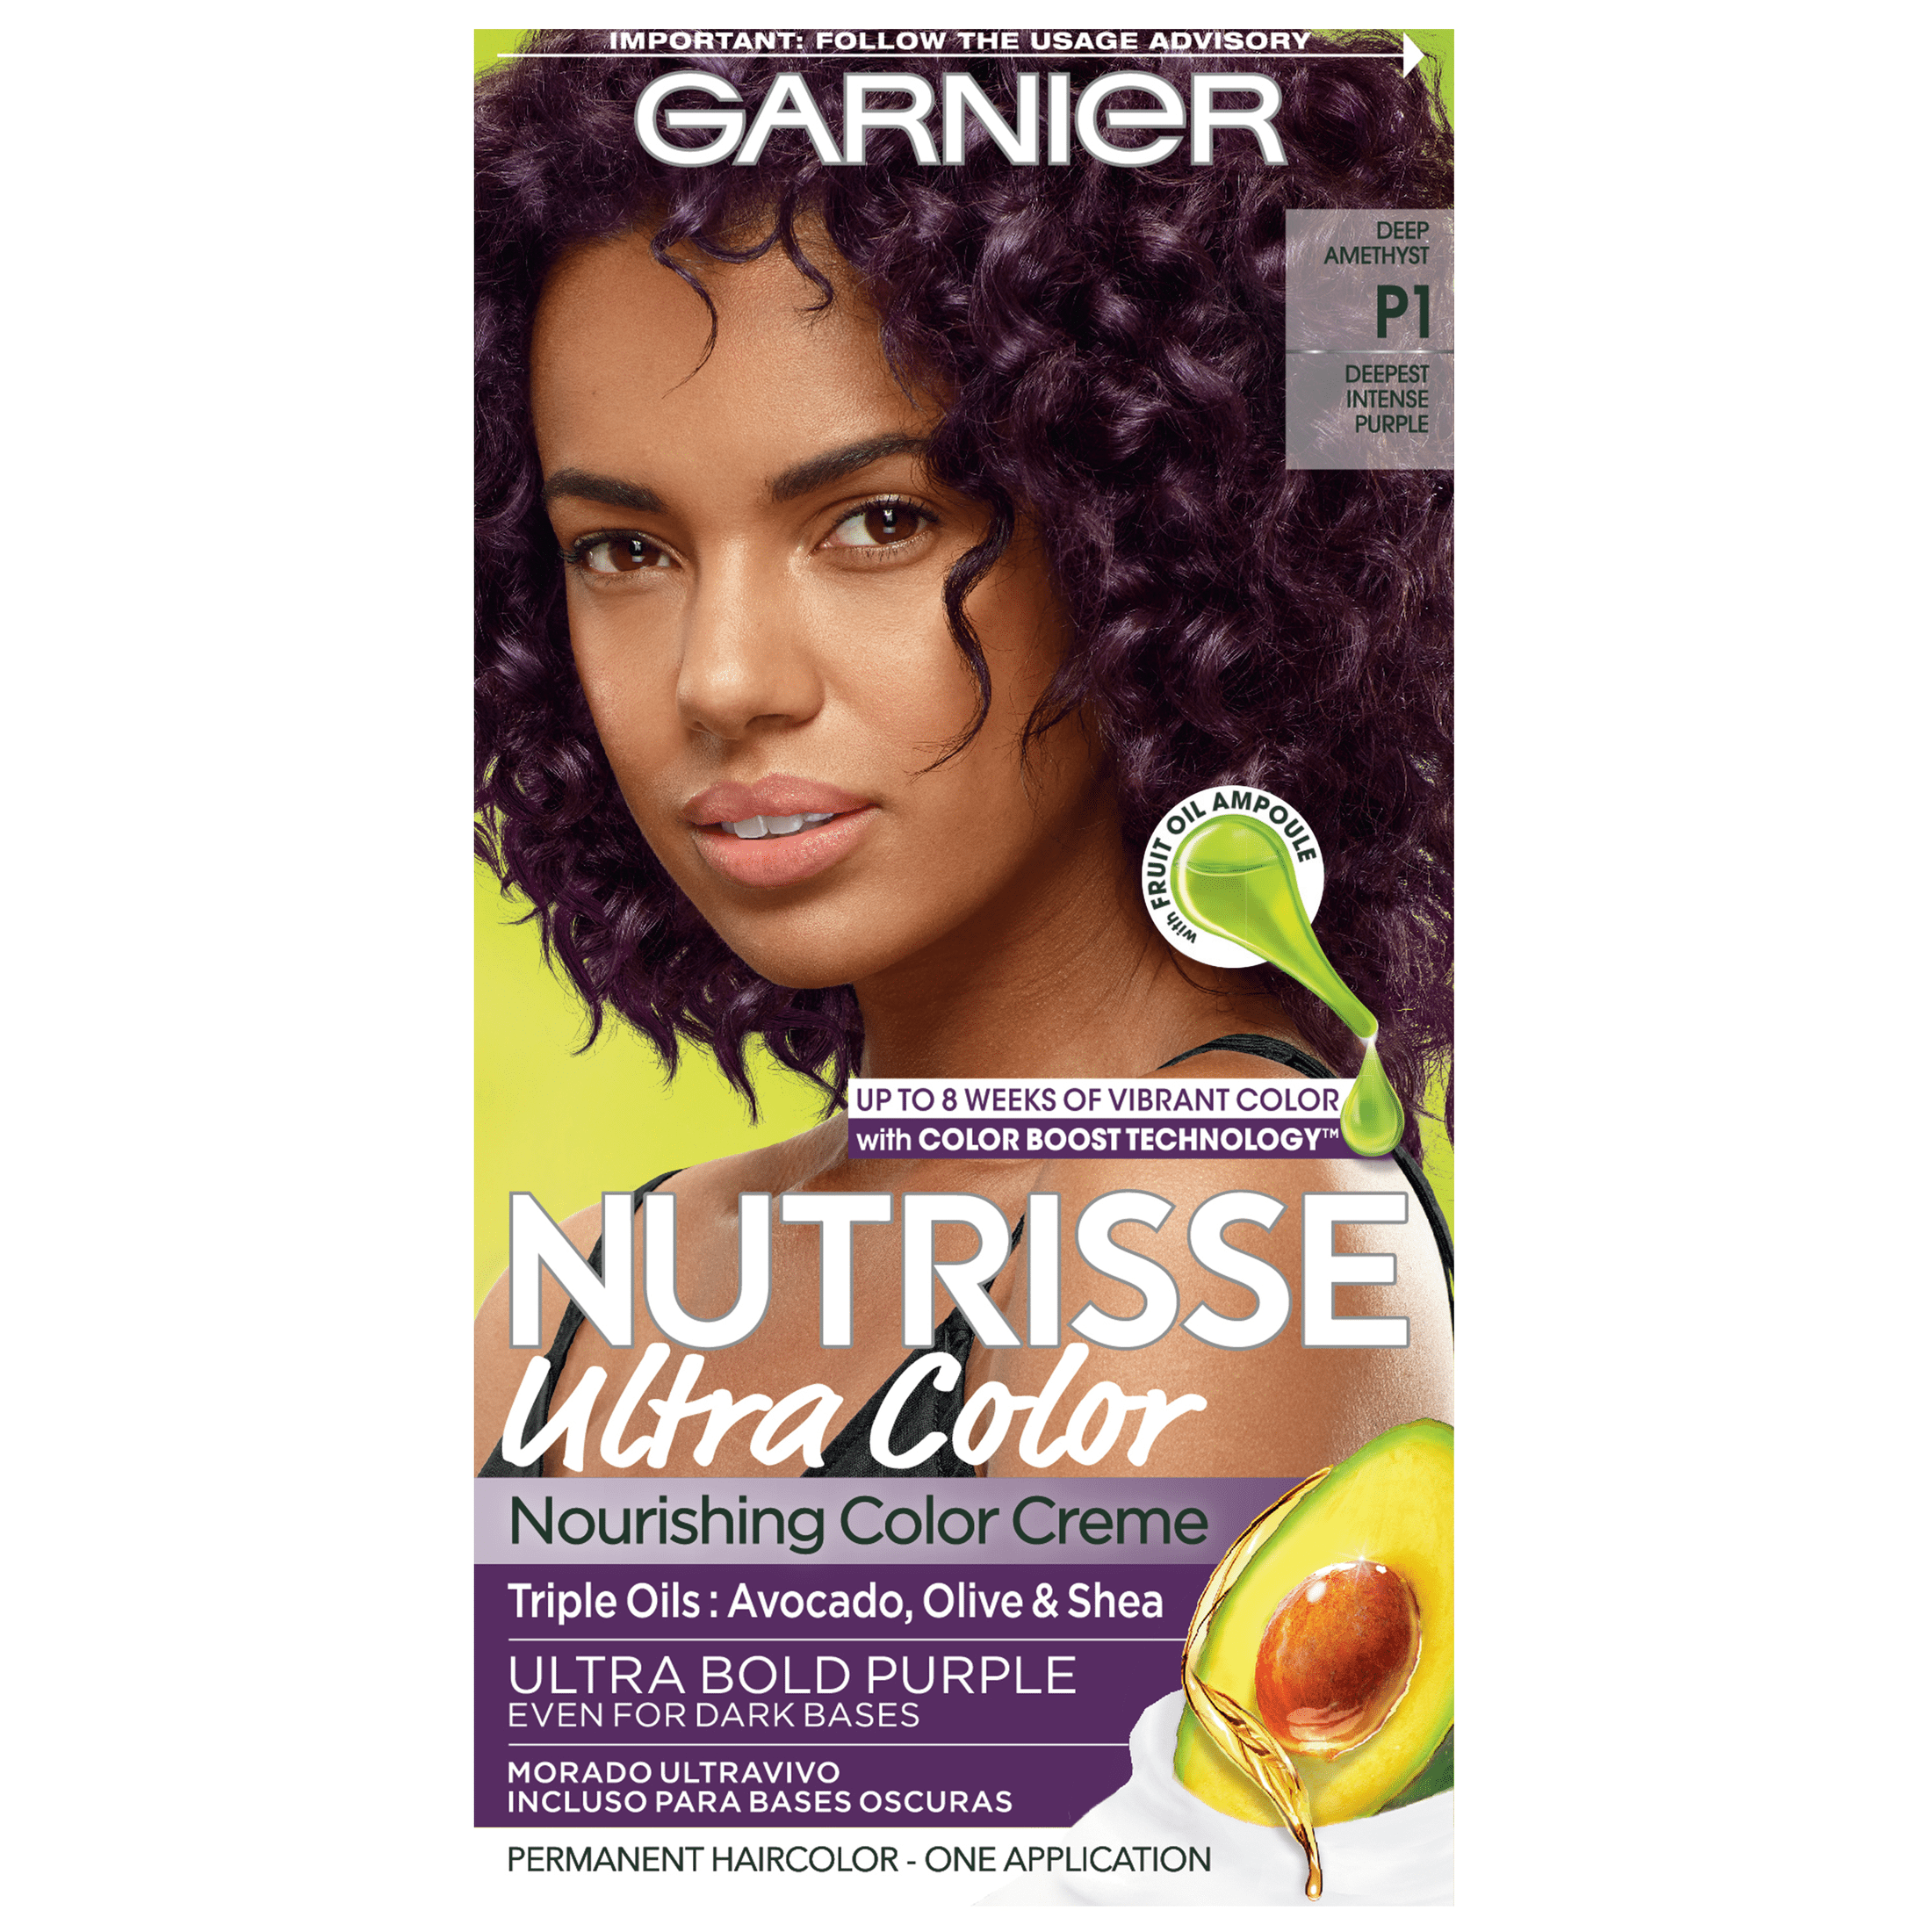 garnier-nutrisse-nourishing-hair-color-creme-p1-deepest-intense-purple